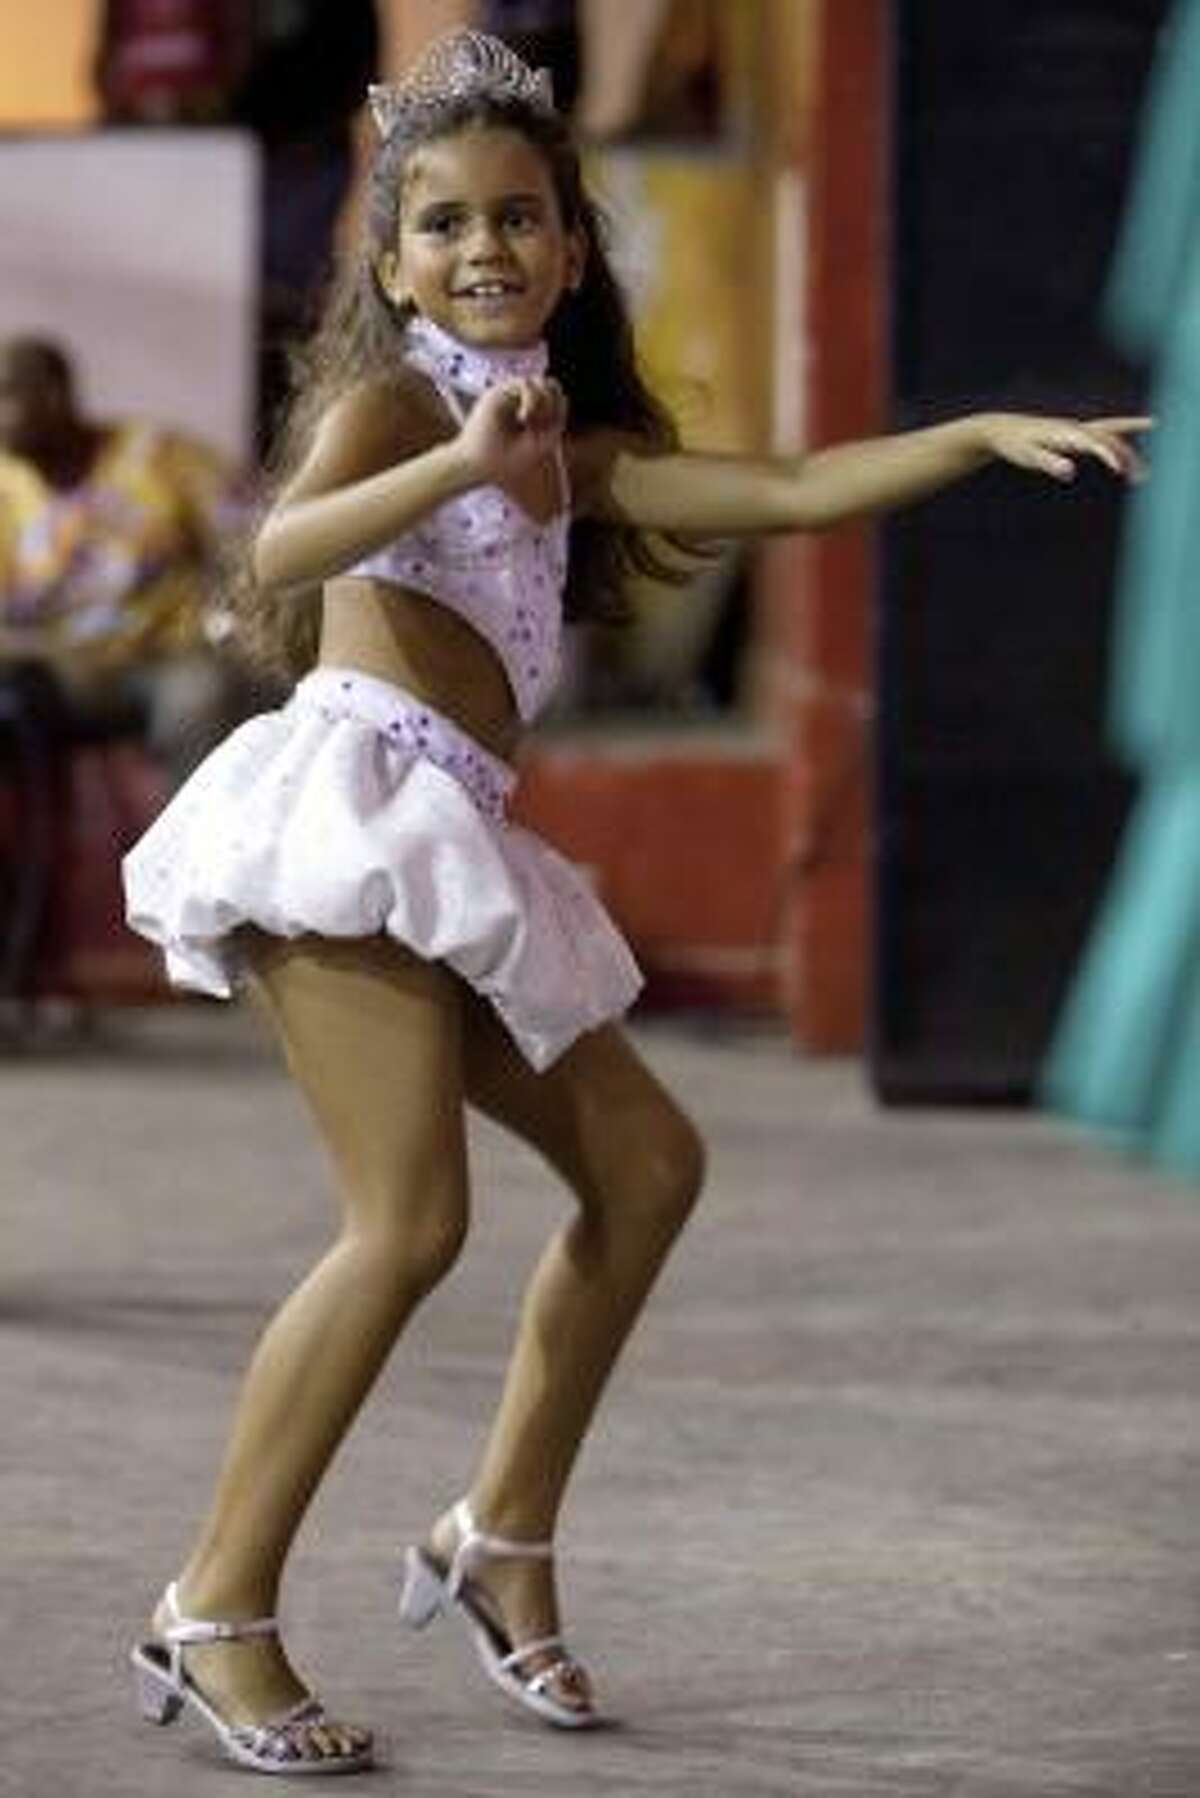 Julia Lira, 7, dances during a rehearsal by the Viradouro samba school in Rio de Janeiro late Wednesday, Feb. 3, 2010. Read the story | More world news | Chron.com